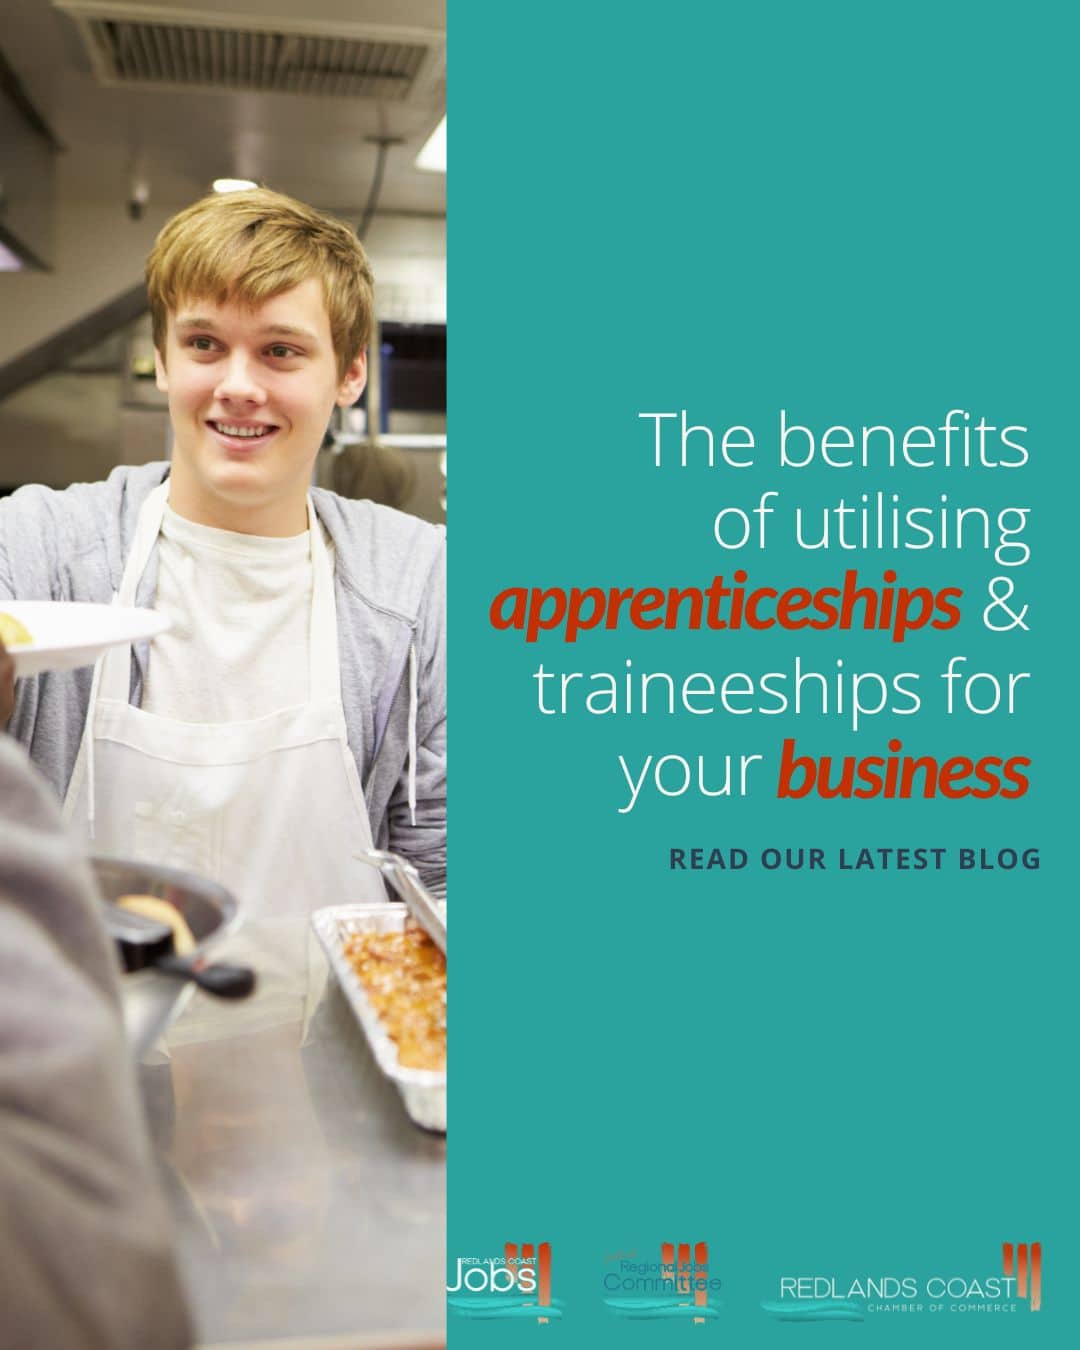 The benefits of utilising apprenticeships